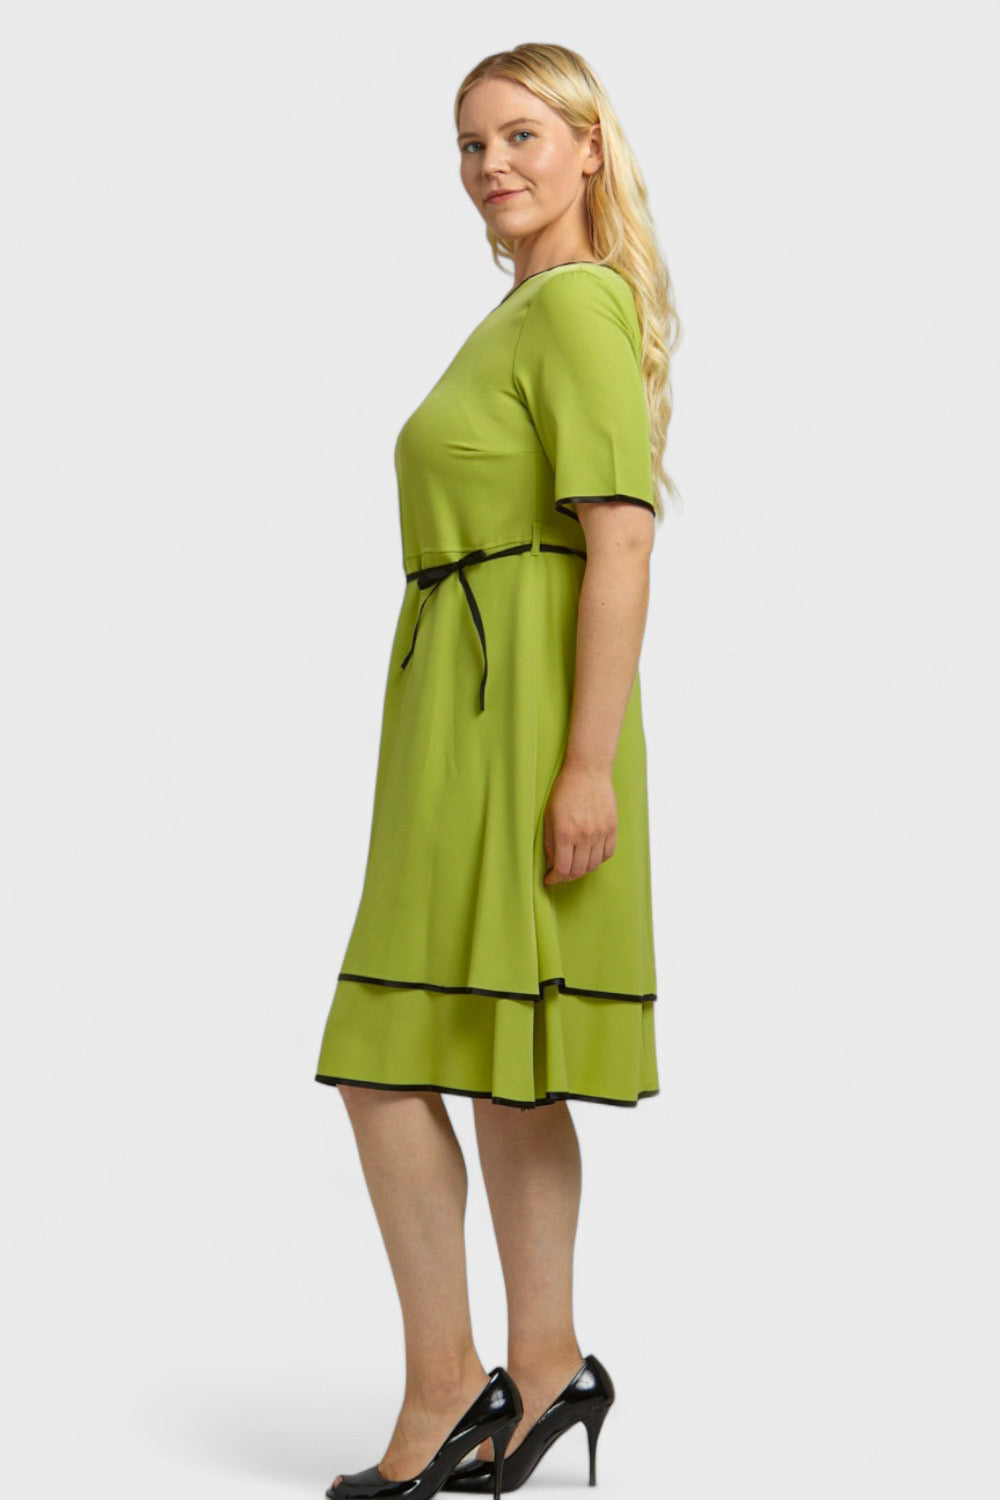 Angelia Plus Size Pistachio Green Ruffled Dress by Oltretempo Italian Women's Fashion